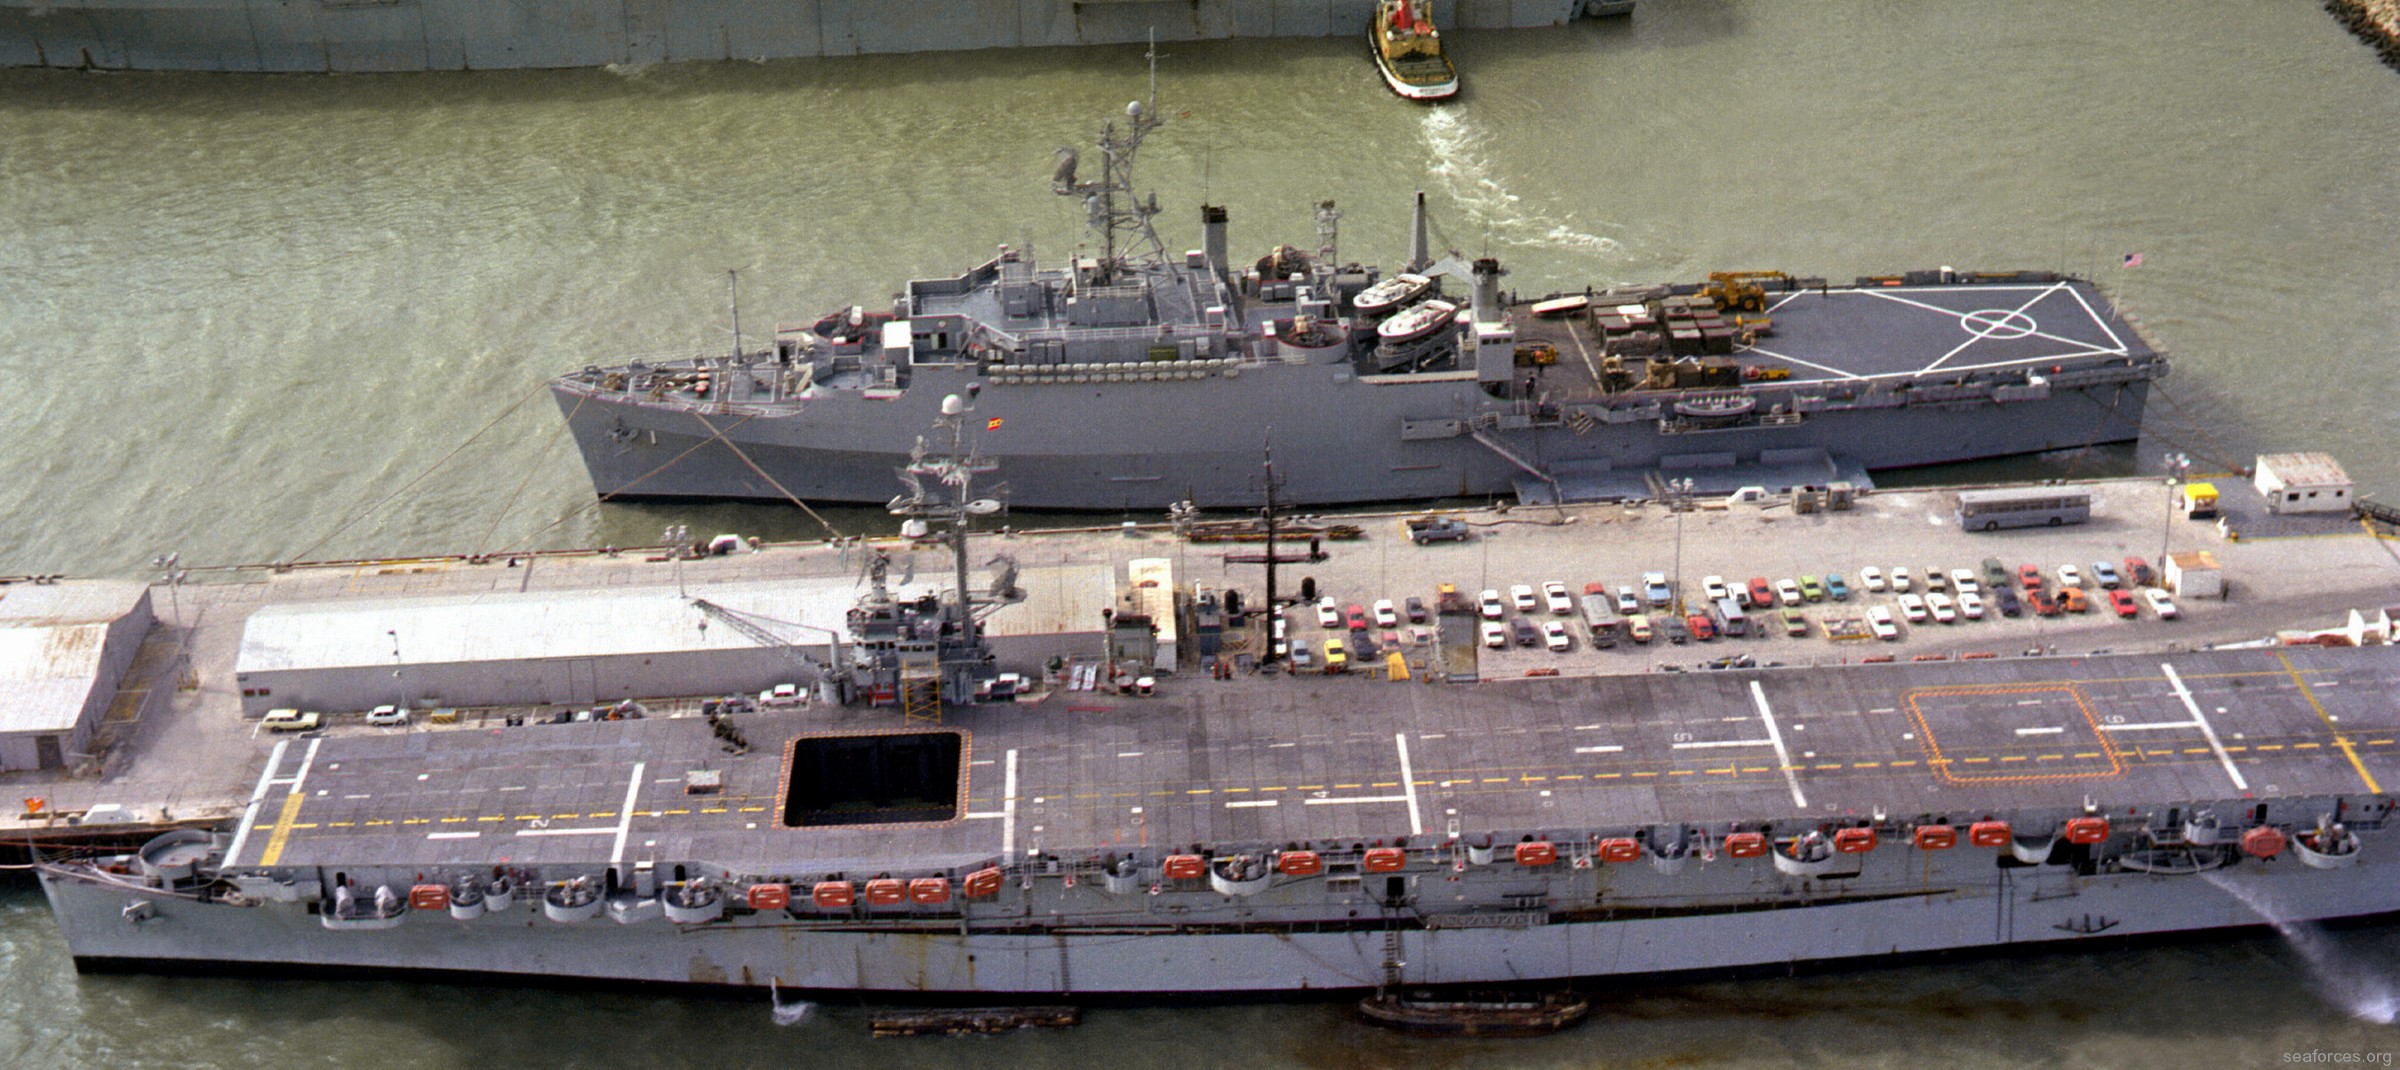 r-01 sps dedalo aircraft carrier spanish navy armada espanola 03 naval station rota